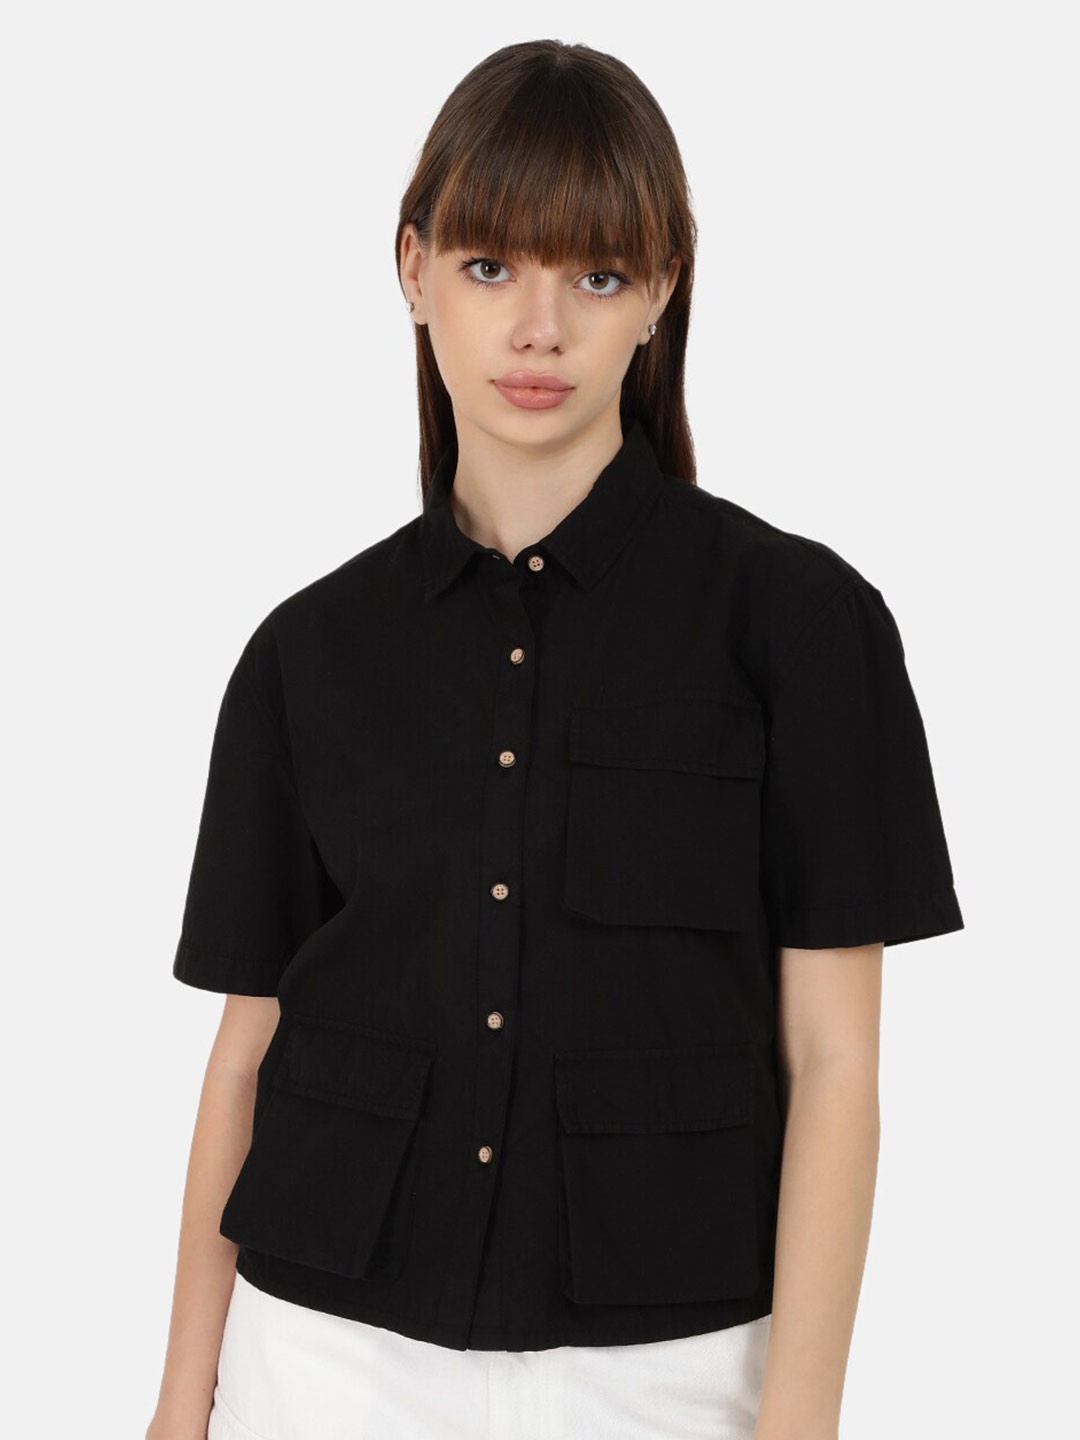 

Bene Kleed Spread Collar Short Sleeves Cotton Casual Shirt, Black